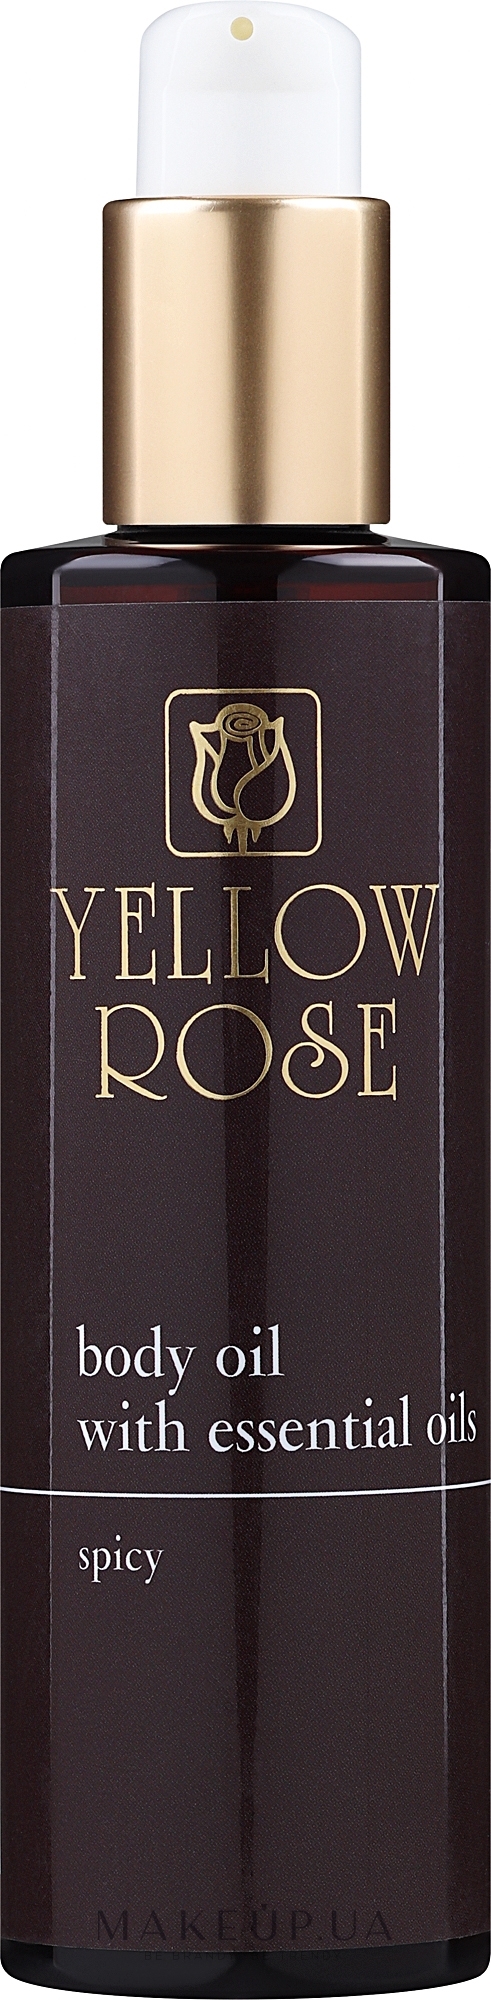 Смягчающее масло для тела - Yellow Rose Body Oil With Essential Oils Spicy — фото 200ml